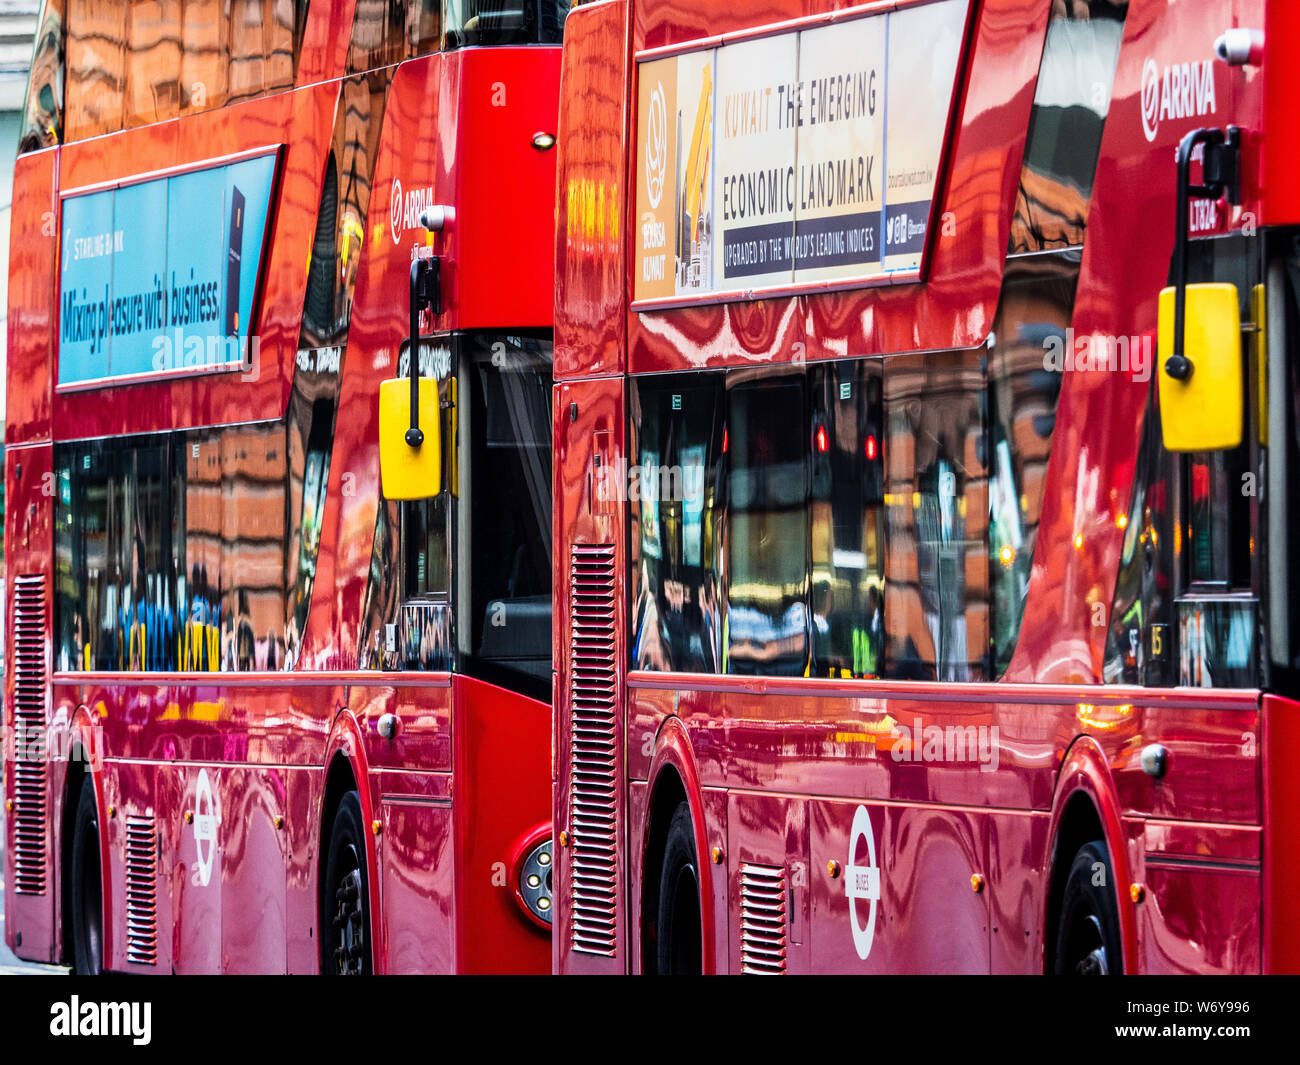 London Buses - Red London Buses - dos autobuses New Routemaster de Londres estacionados cerca de Oxford Street en el centro de Londres Foto de stock